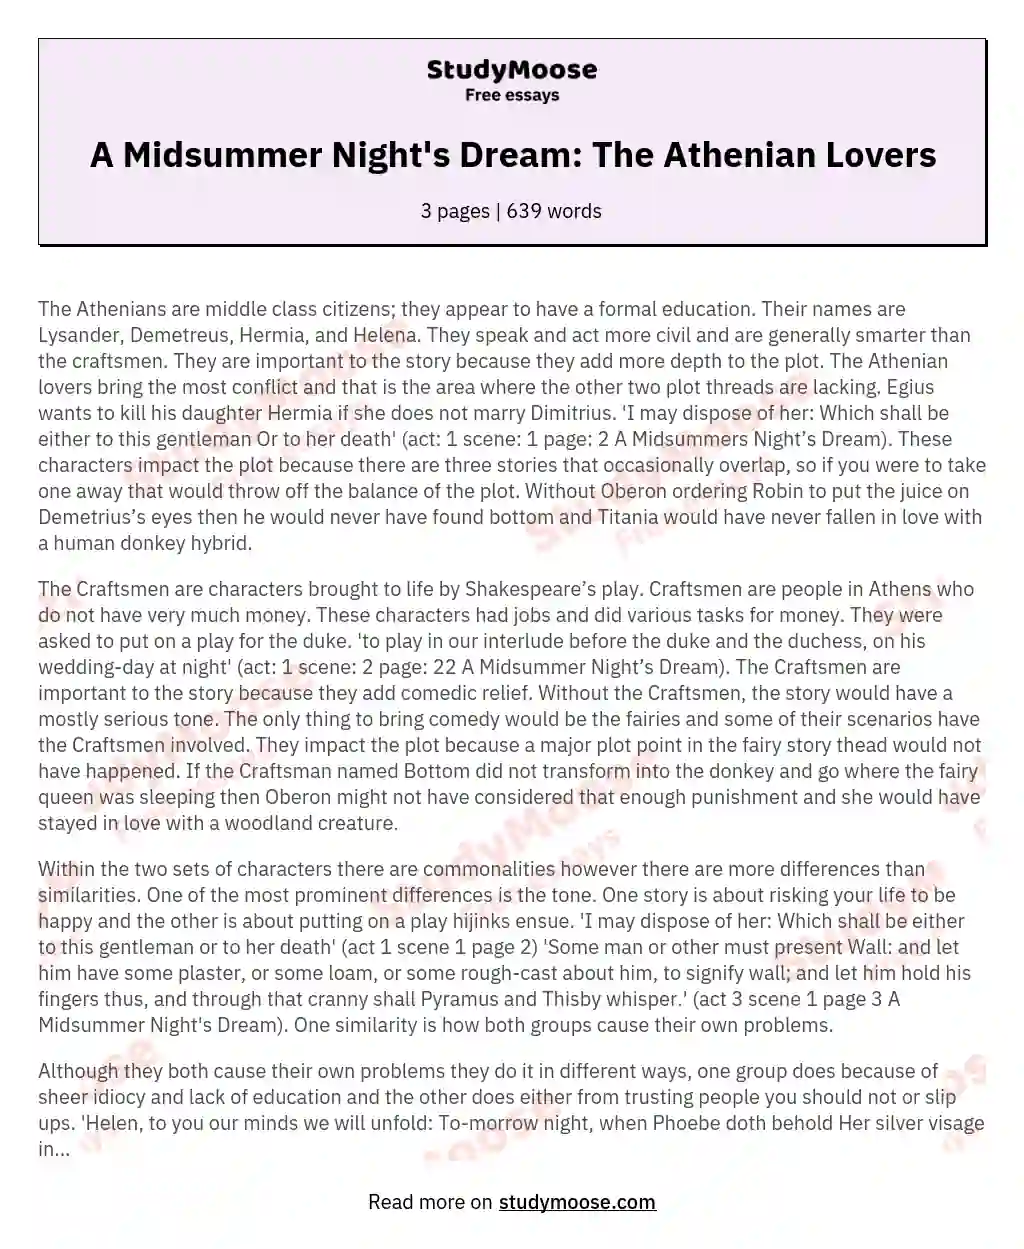 A Midsummer Night's Dream: The Athenian Lovers essay